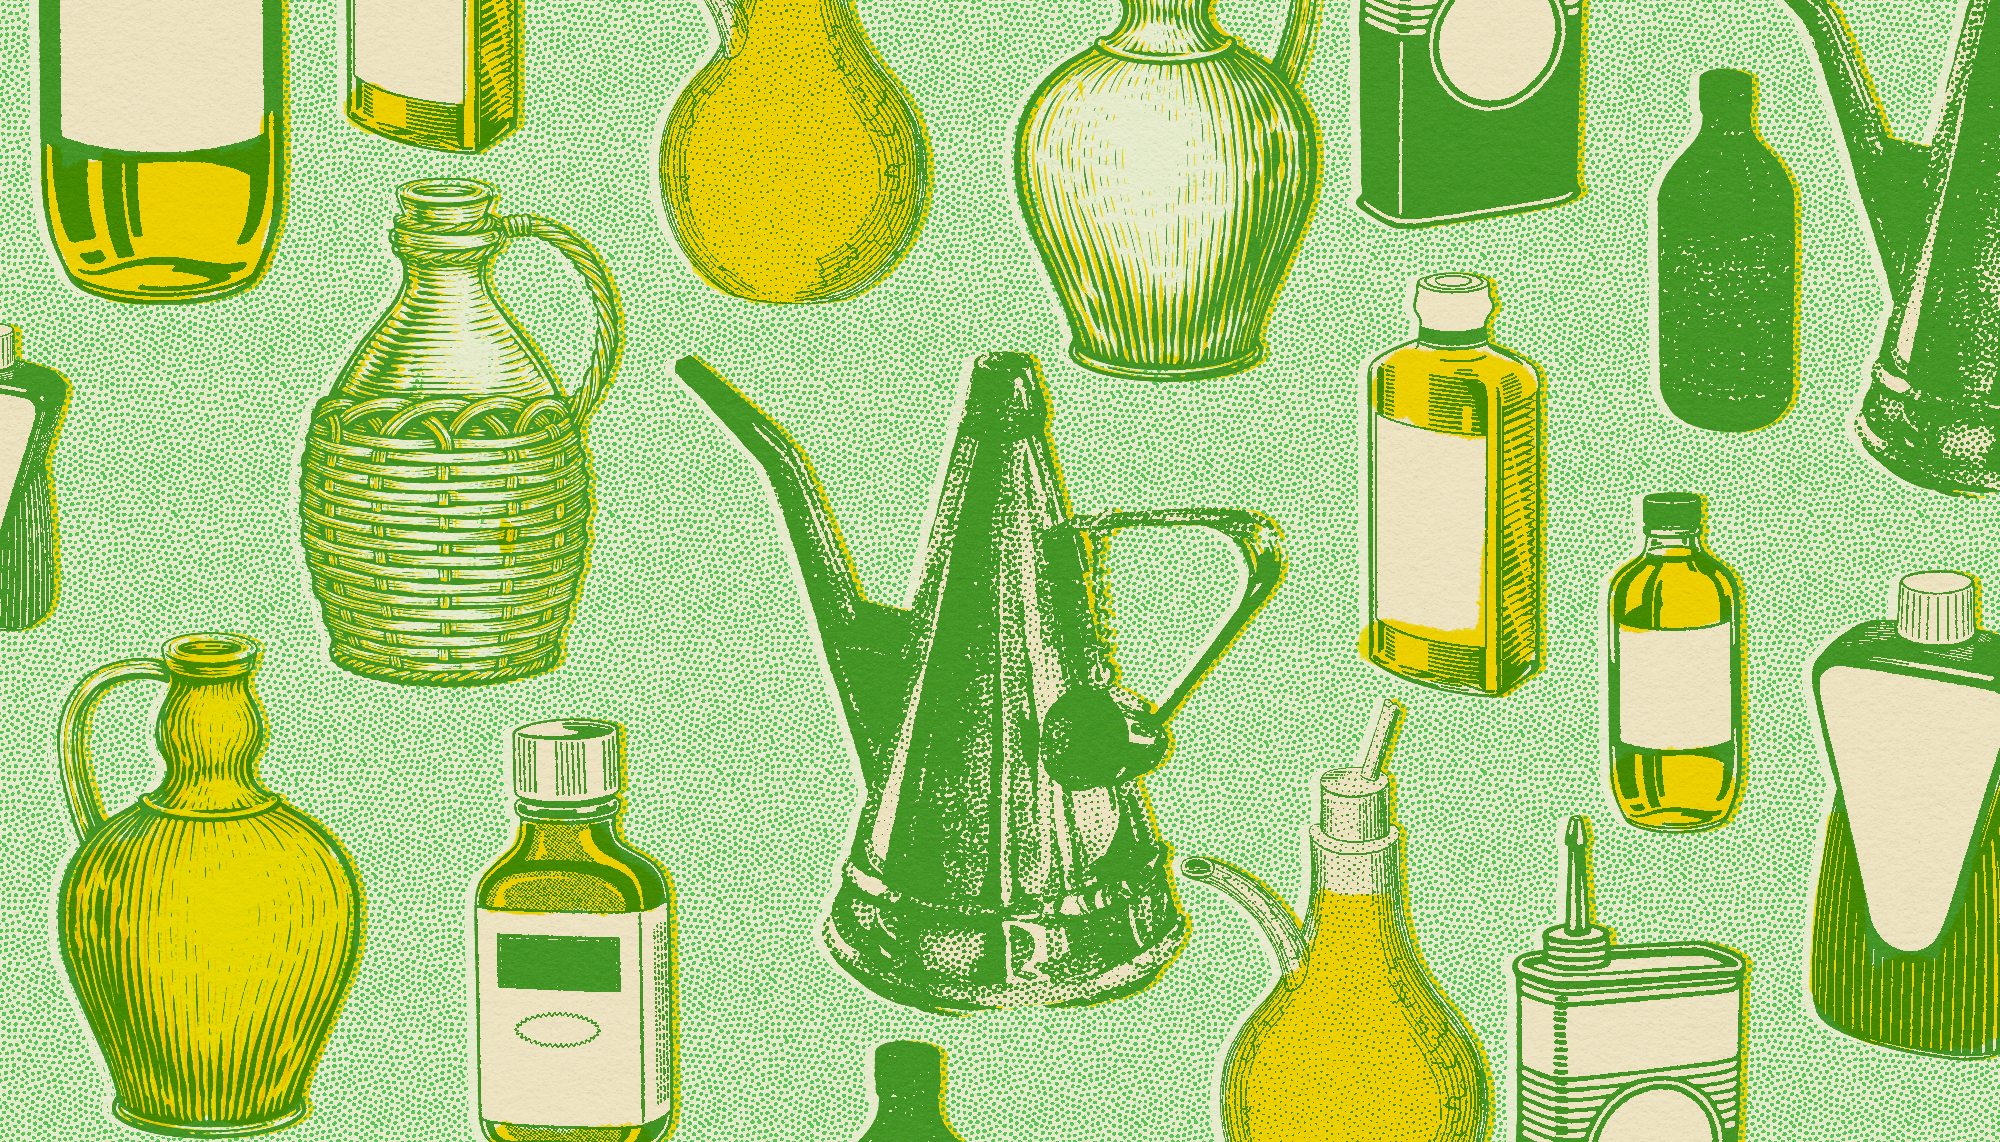 An illustration of oil jars